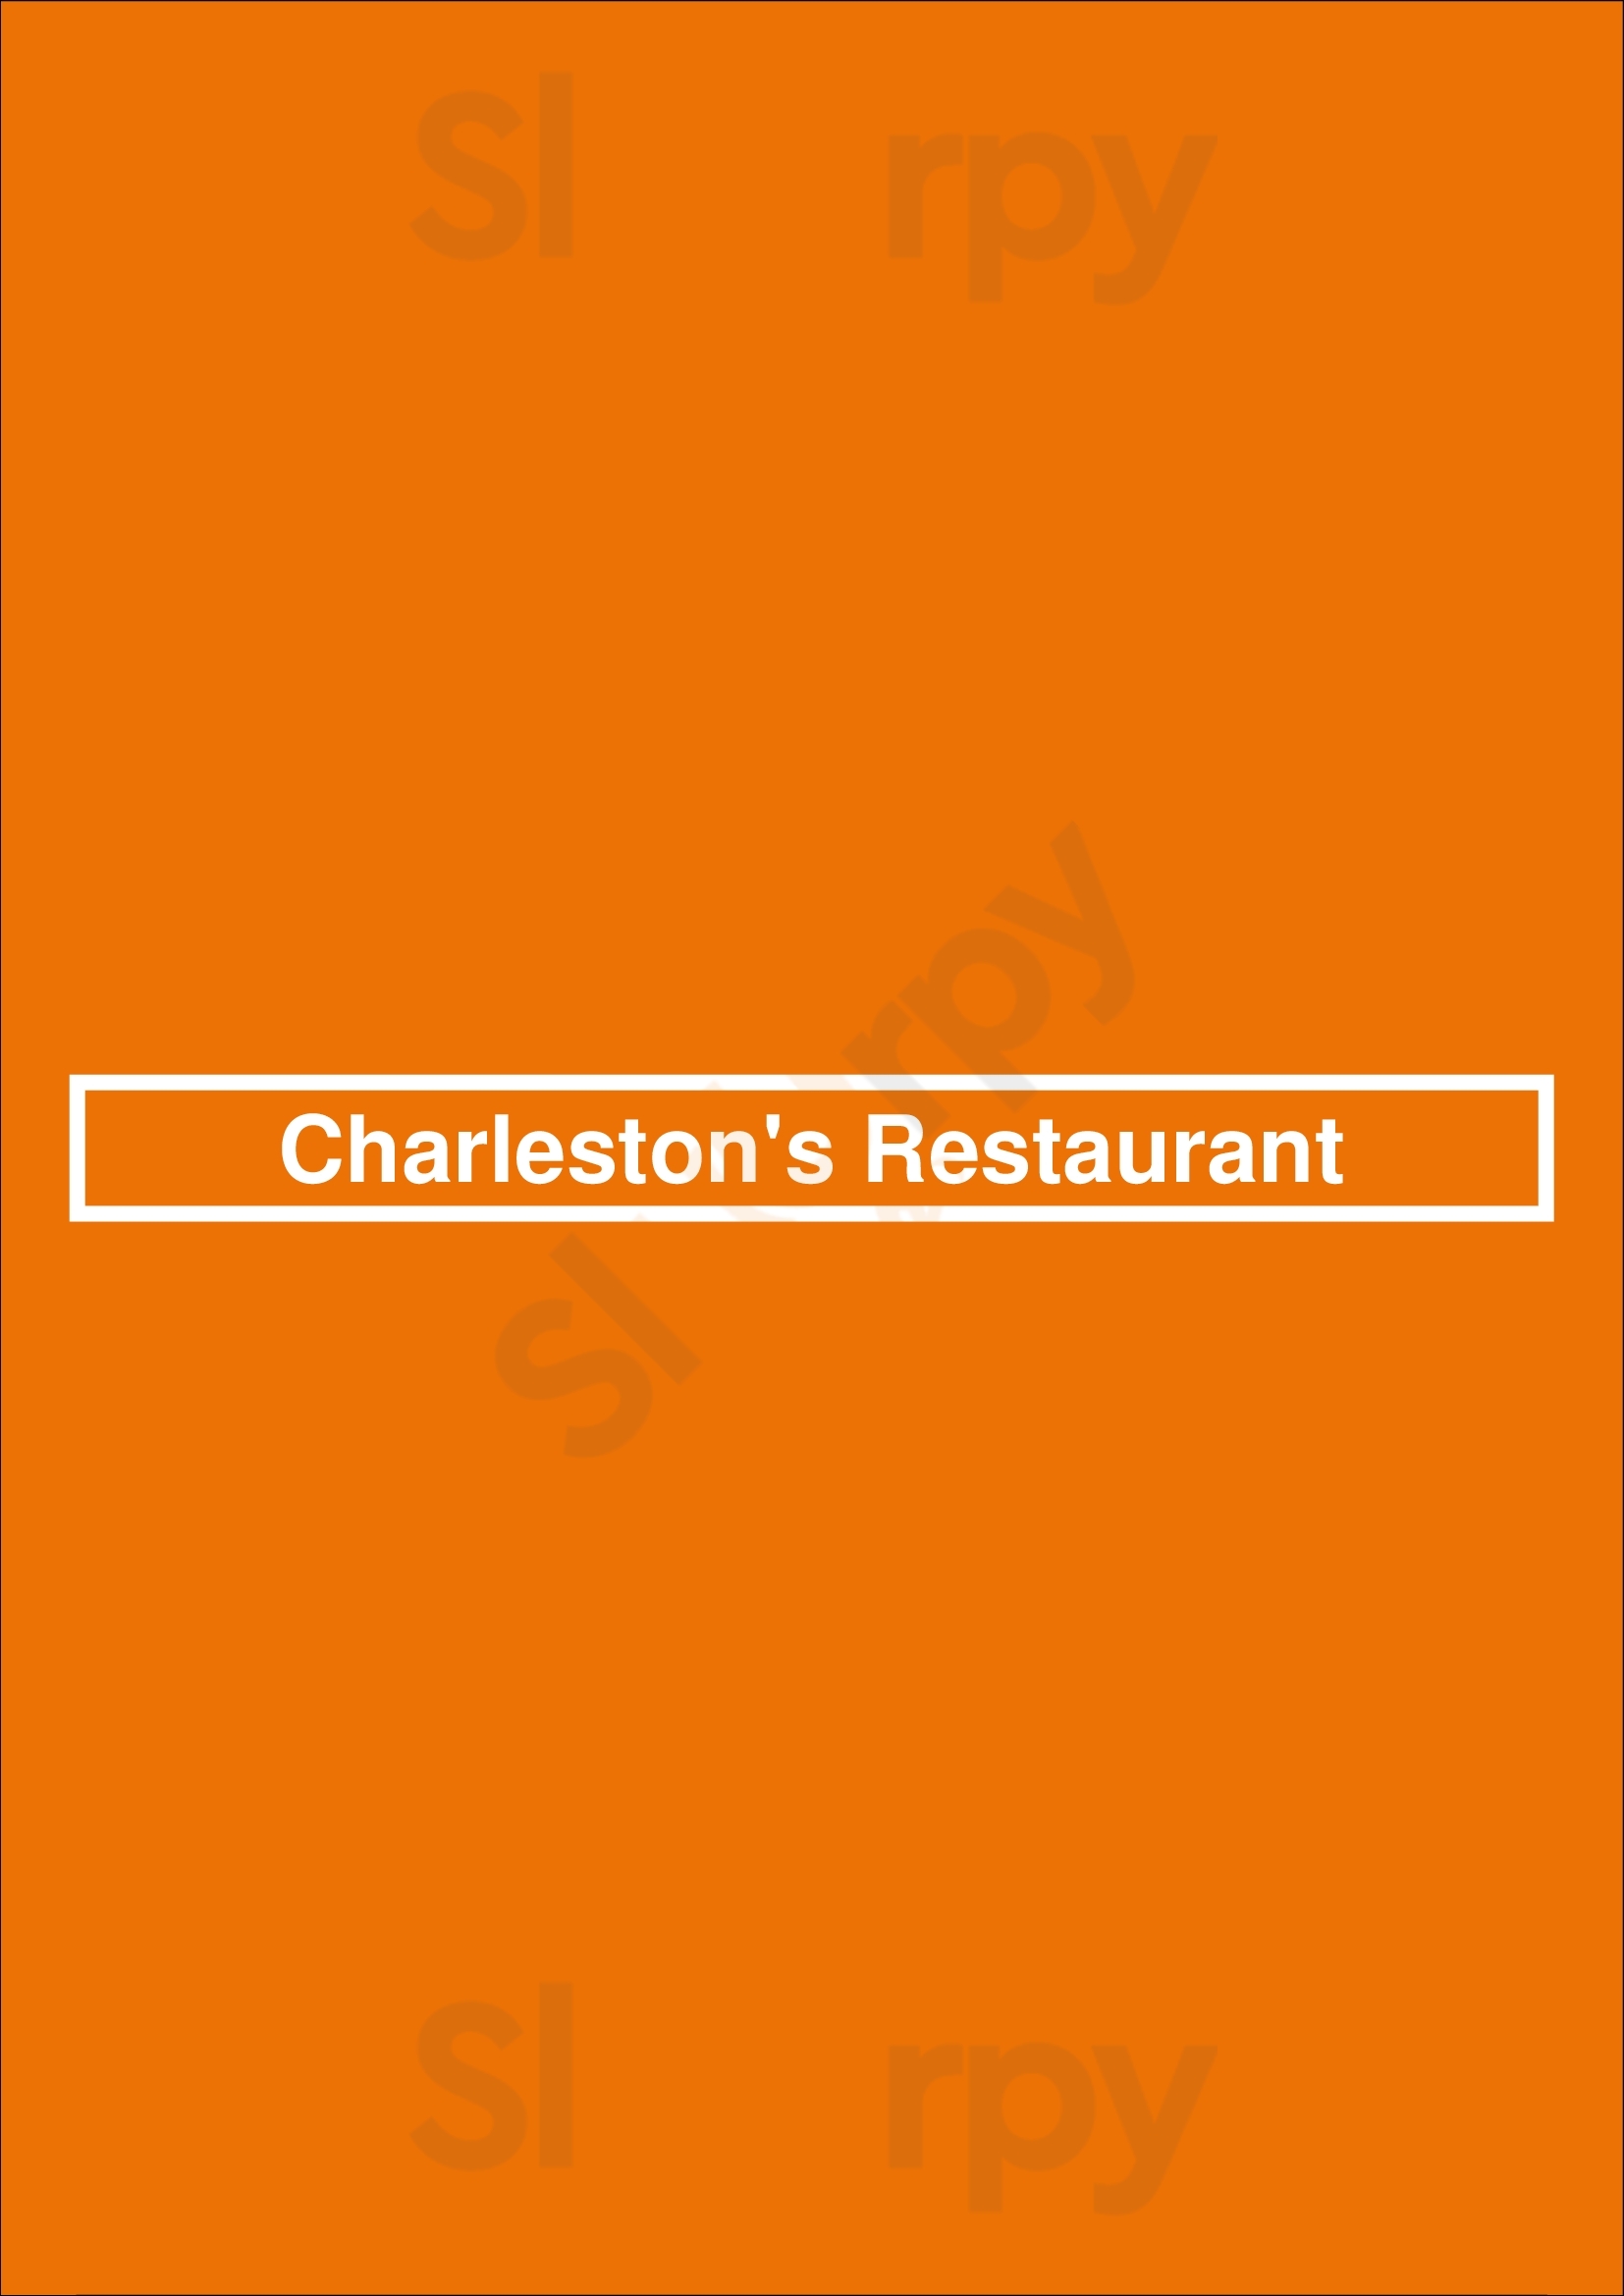 Charleston's Restaurant Tulsa Menu - 1